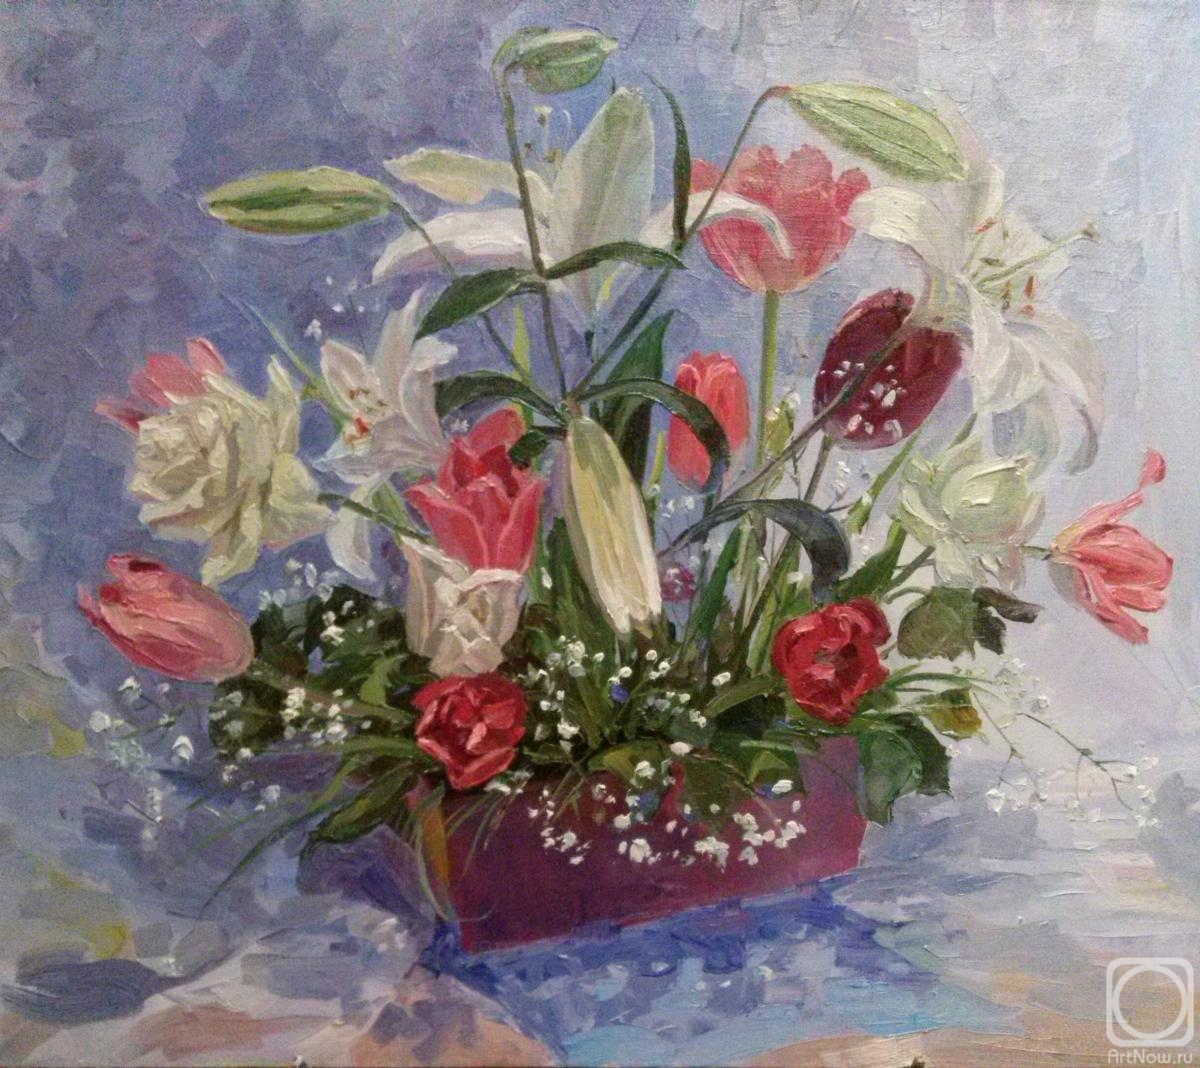 Kirichenko (Sorel) Natalia. Tulips and lilies